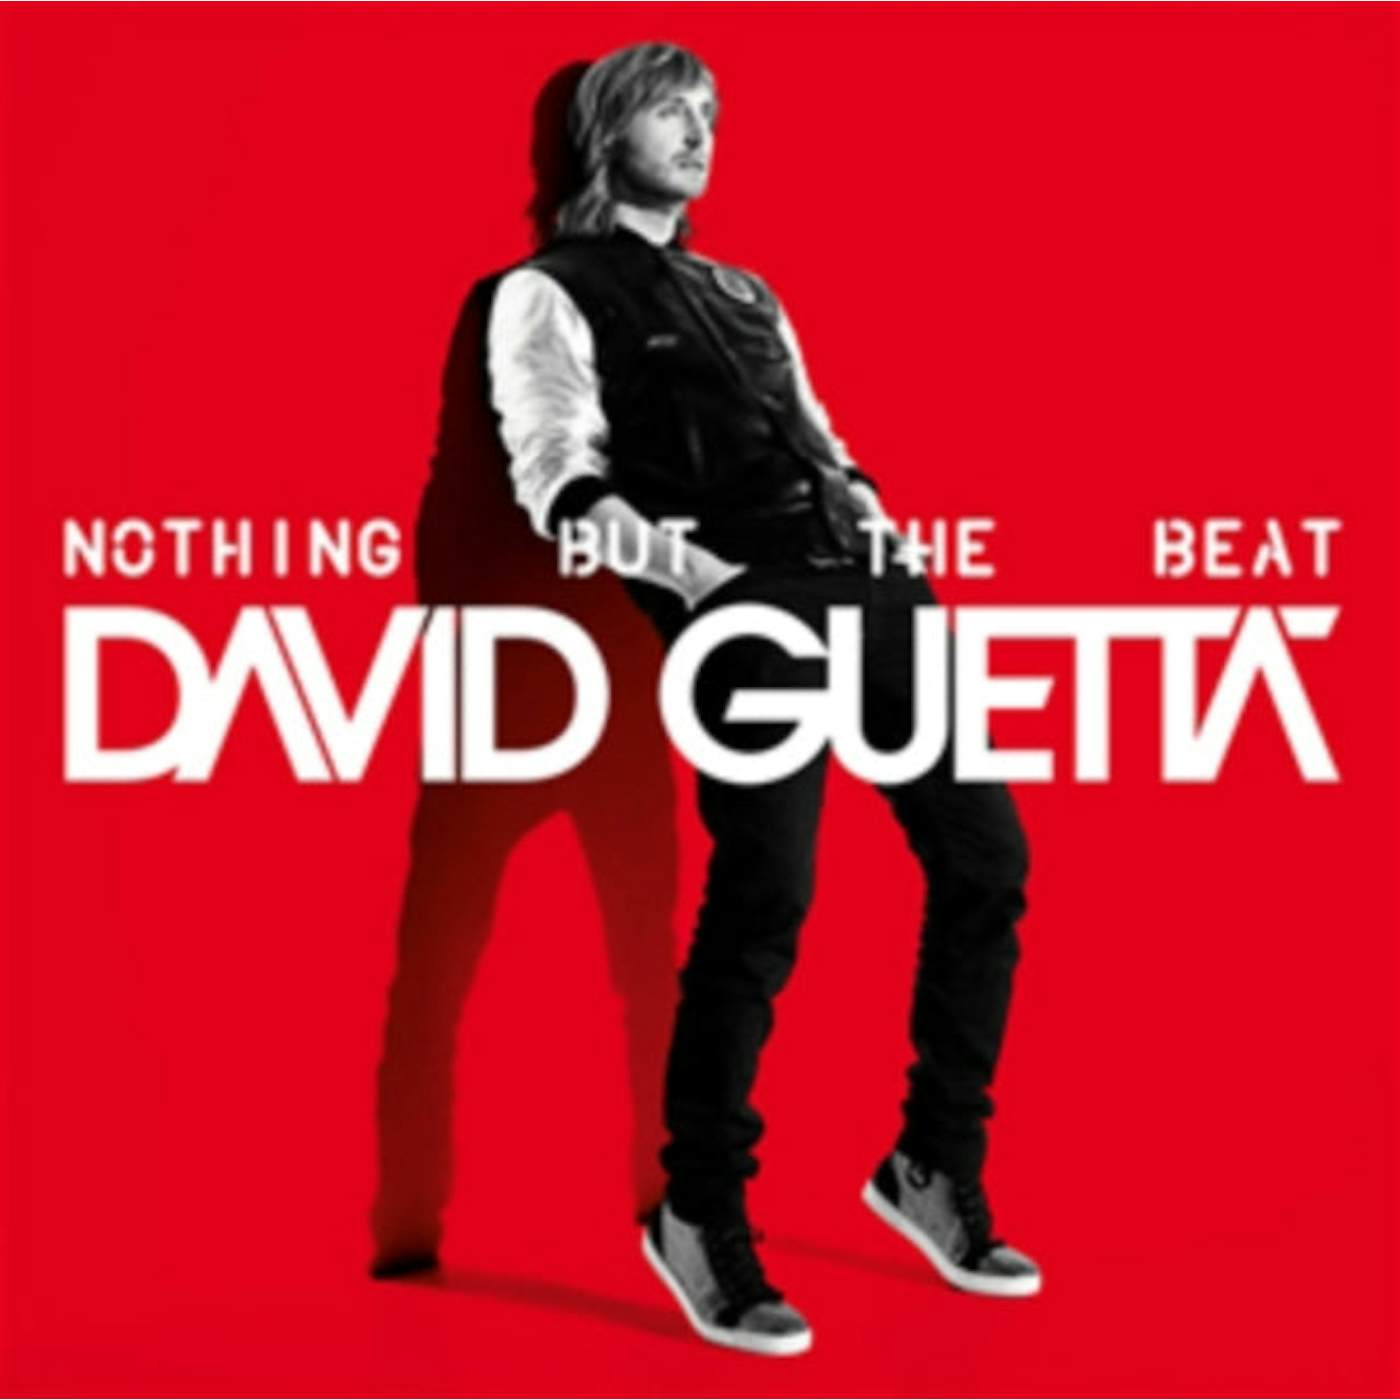 David Guetta LP Vinyl Record - Nothing But The Beat